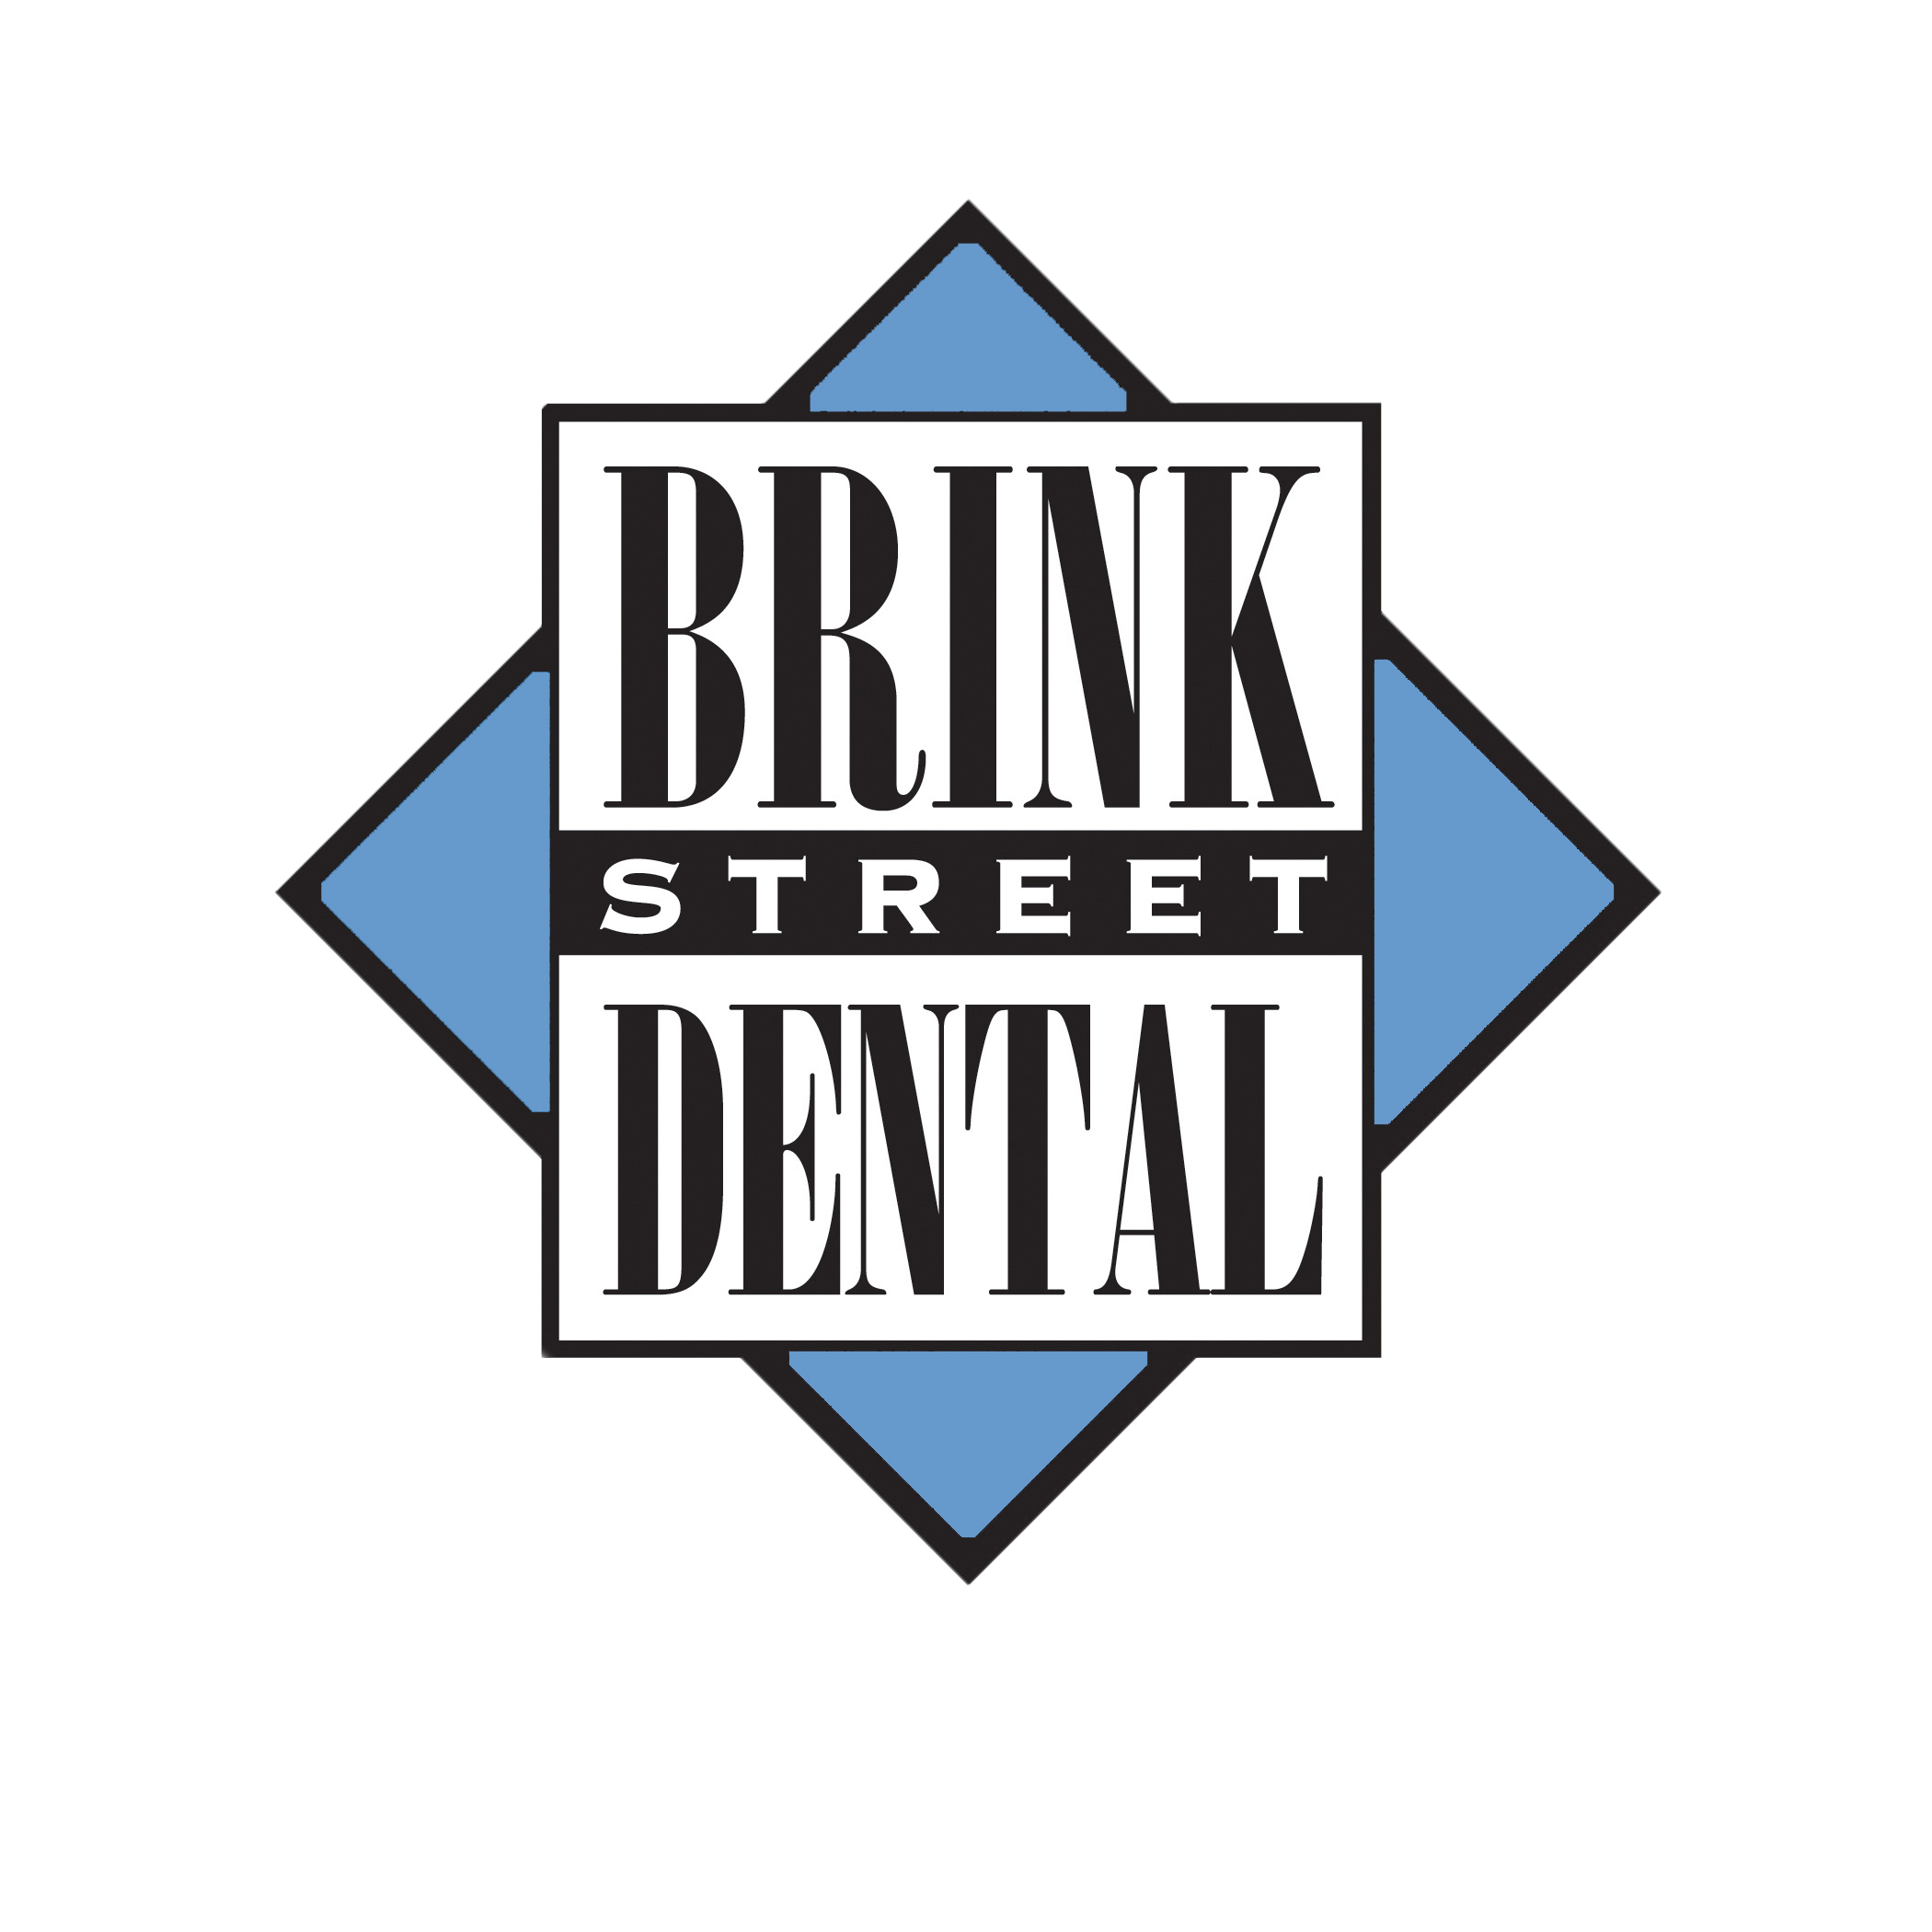 Brink Street Dental